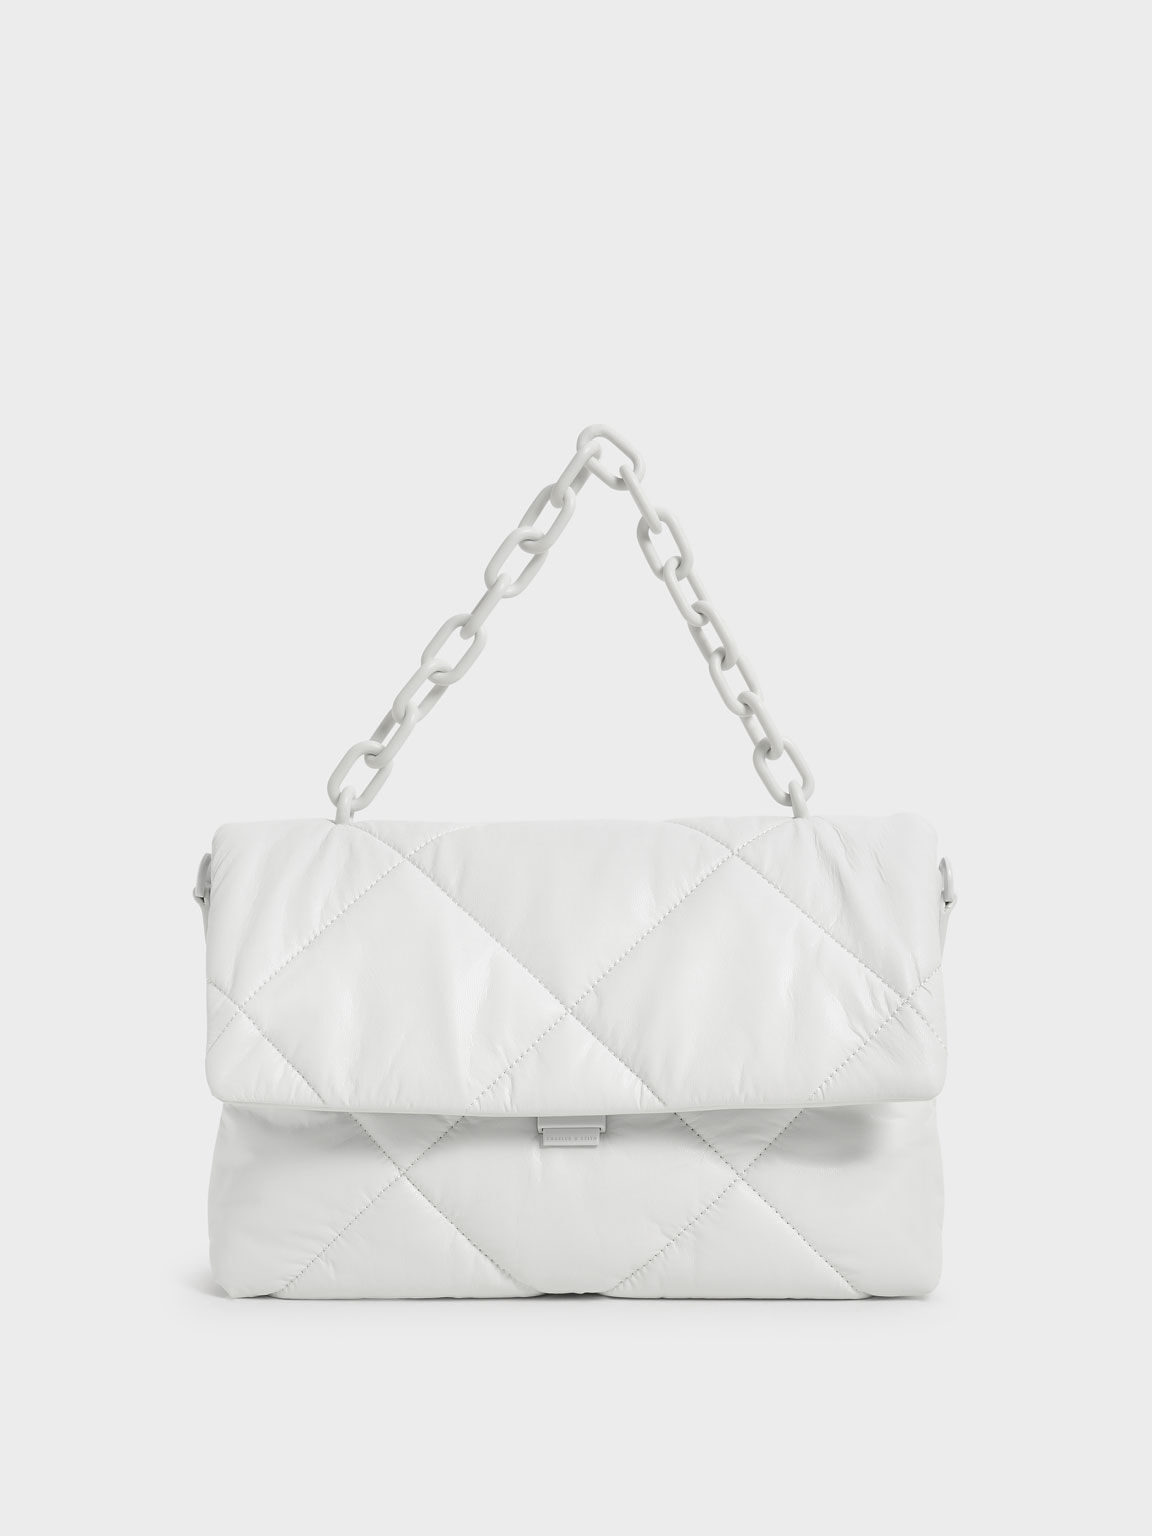 Valentino White Bag Wholesale Offers, Save 63% | jlcatj.gob.mx